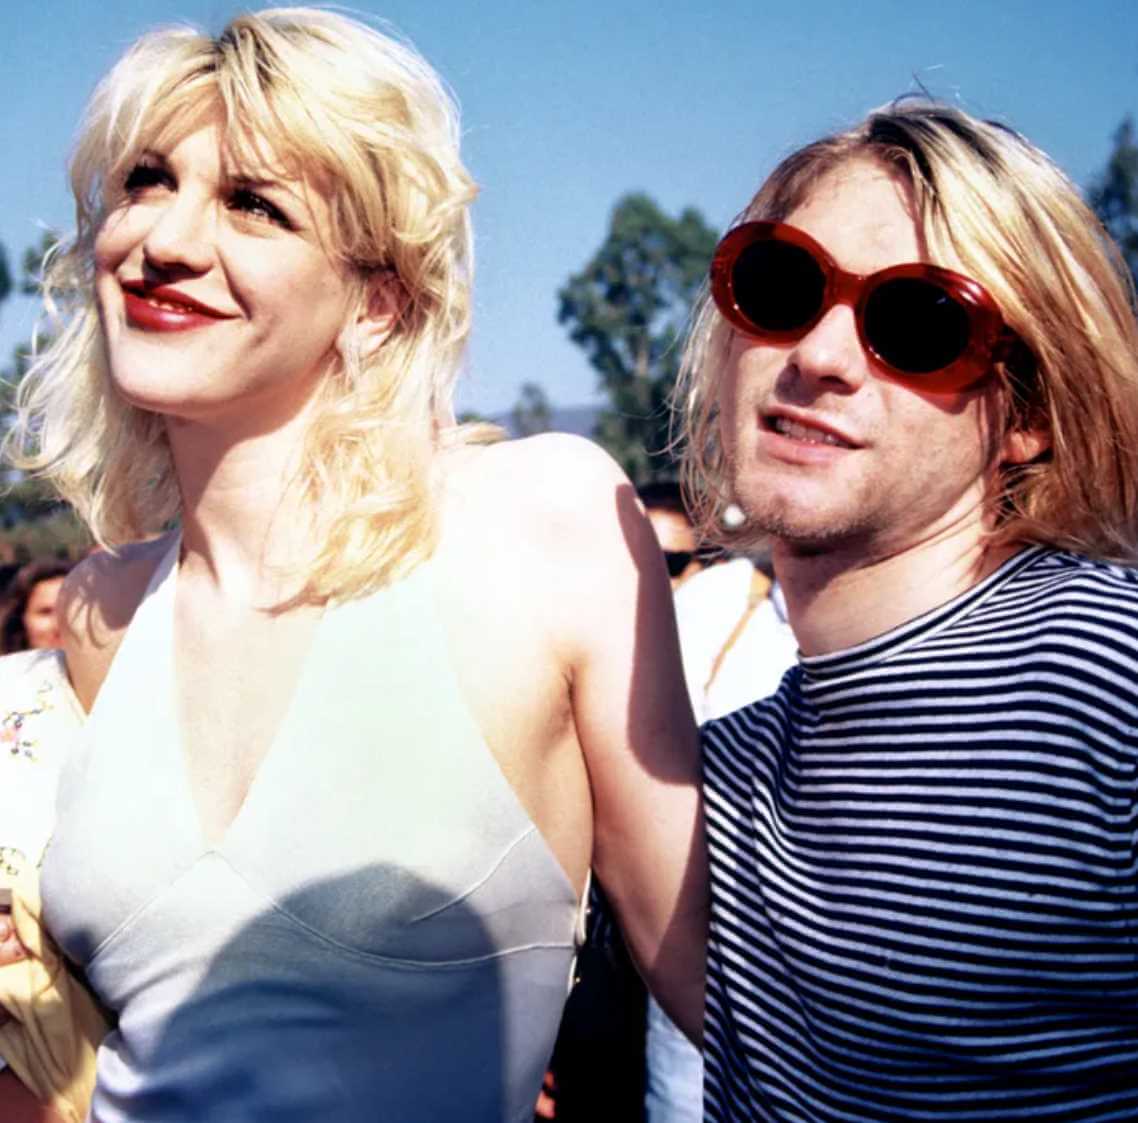 Courtney Love with her husband Kurt Cobain photo